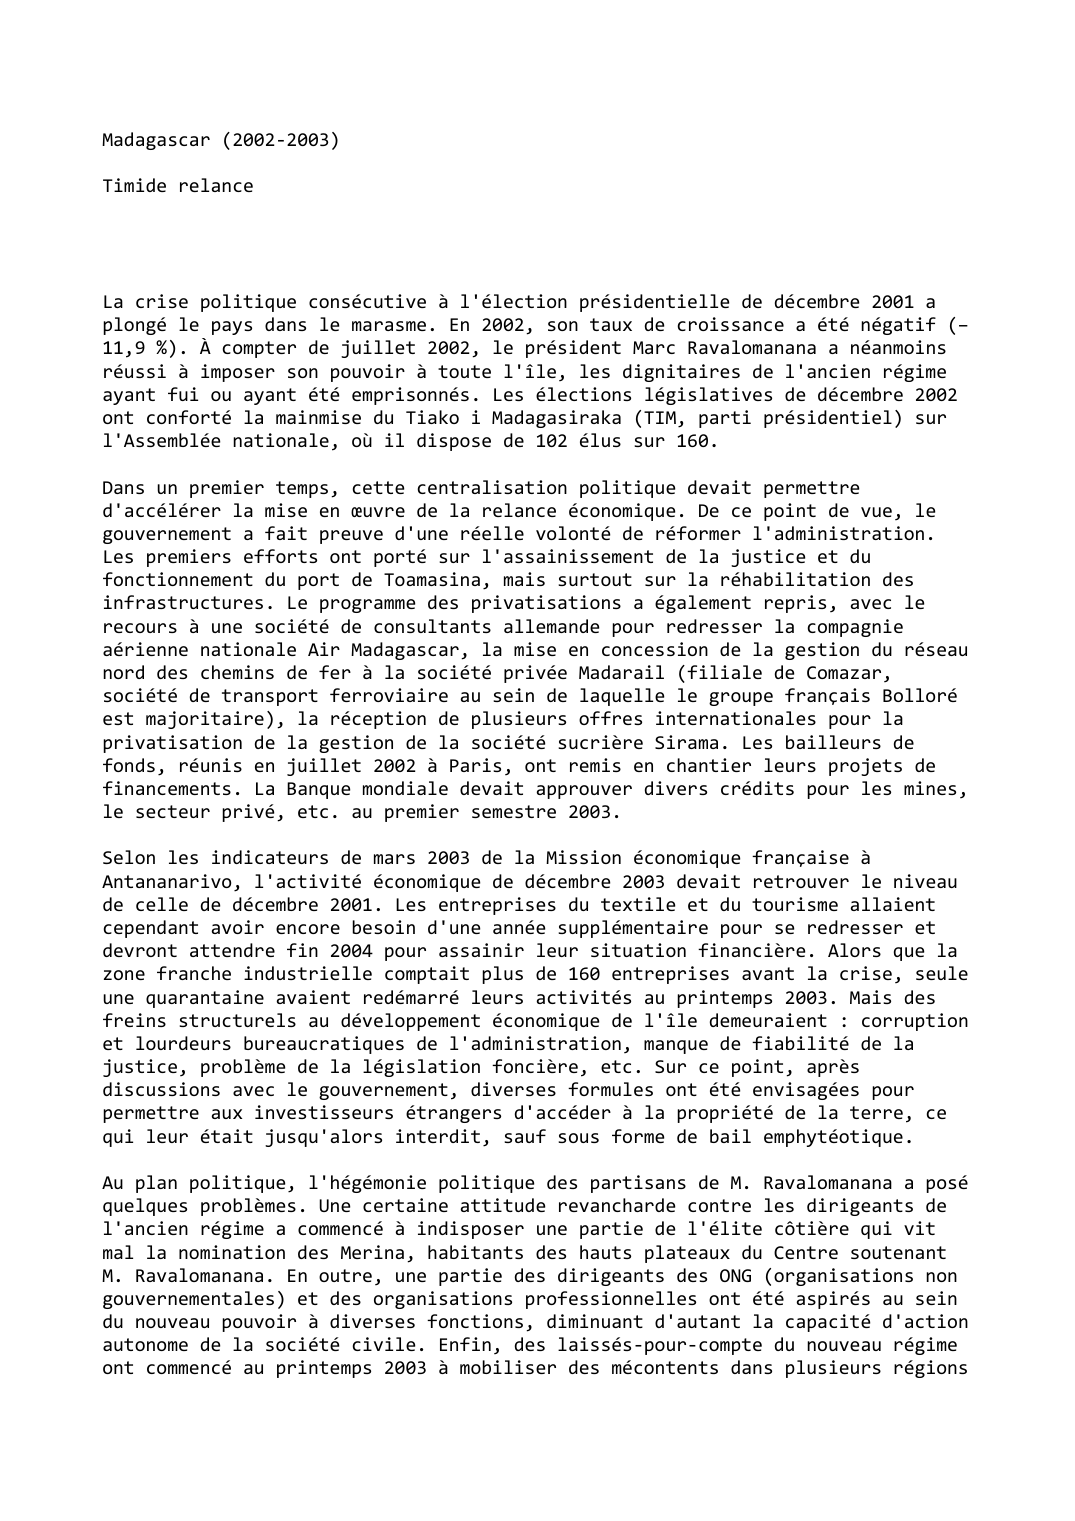 Prévisualisation du document Madagascar (2002-2003)